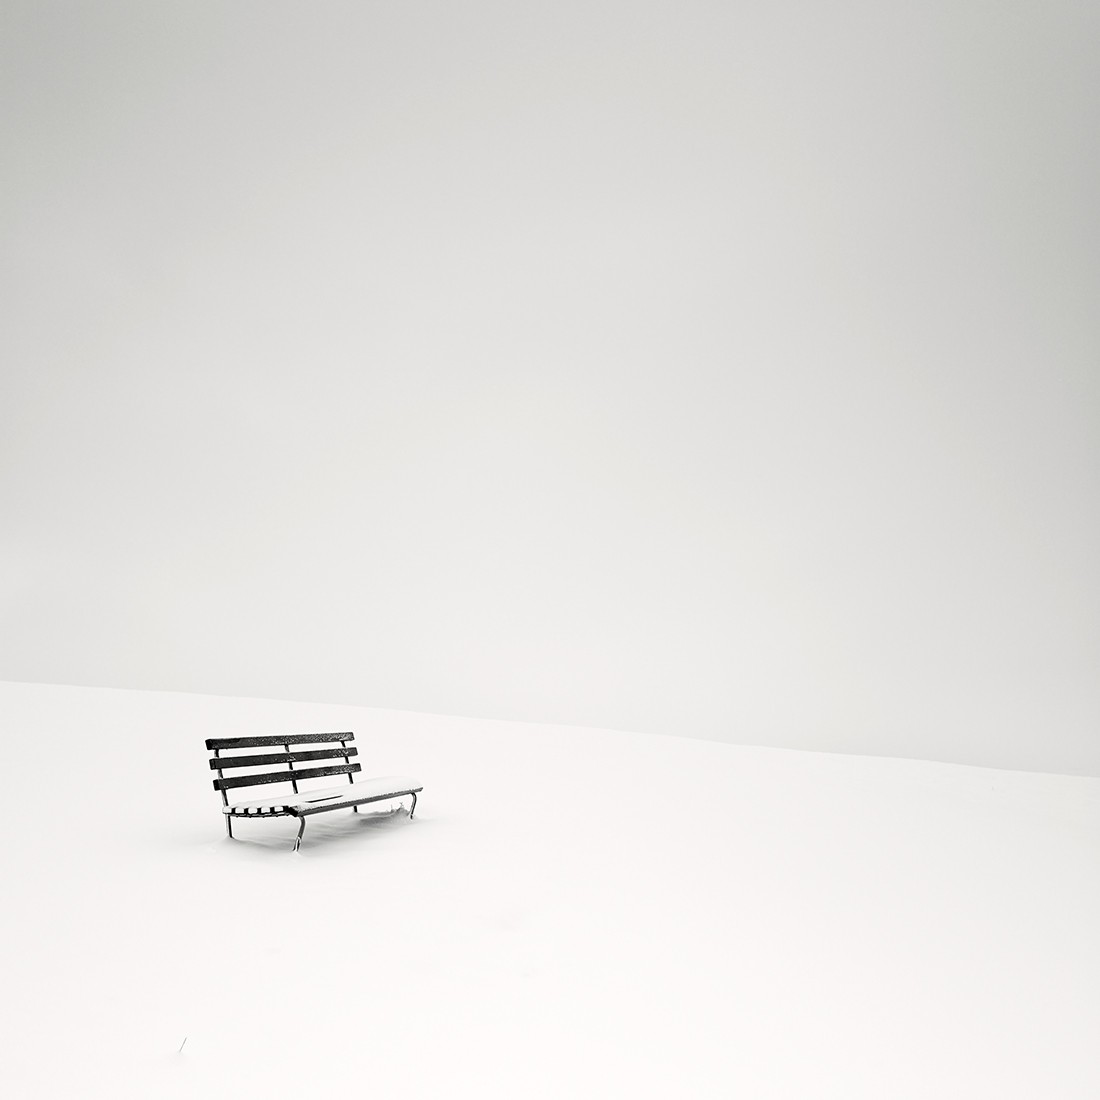 2-е место Black and White Minimalist Photography Prize 2020–2021. Скамейка в снегу. Фотограф Пьер Пеллегрини